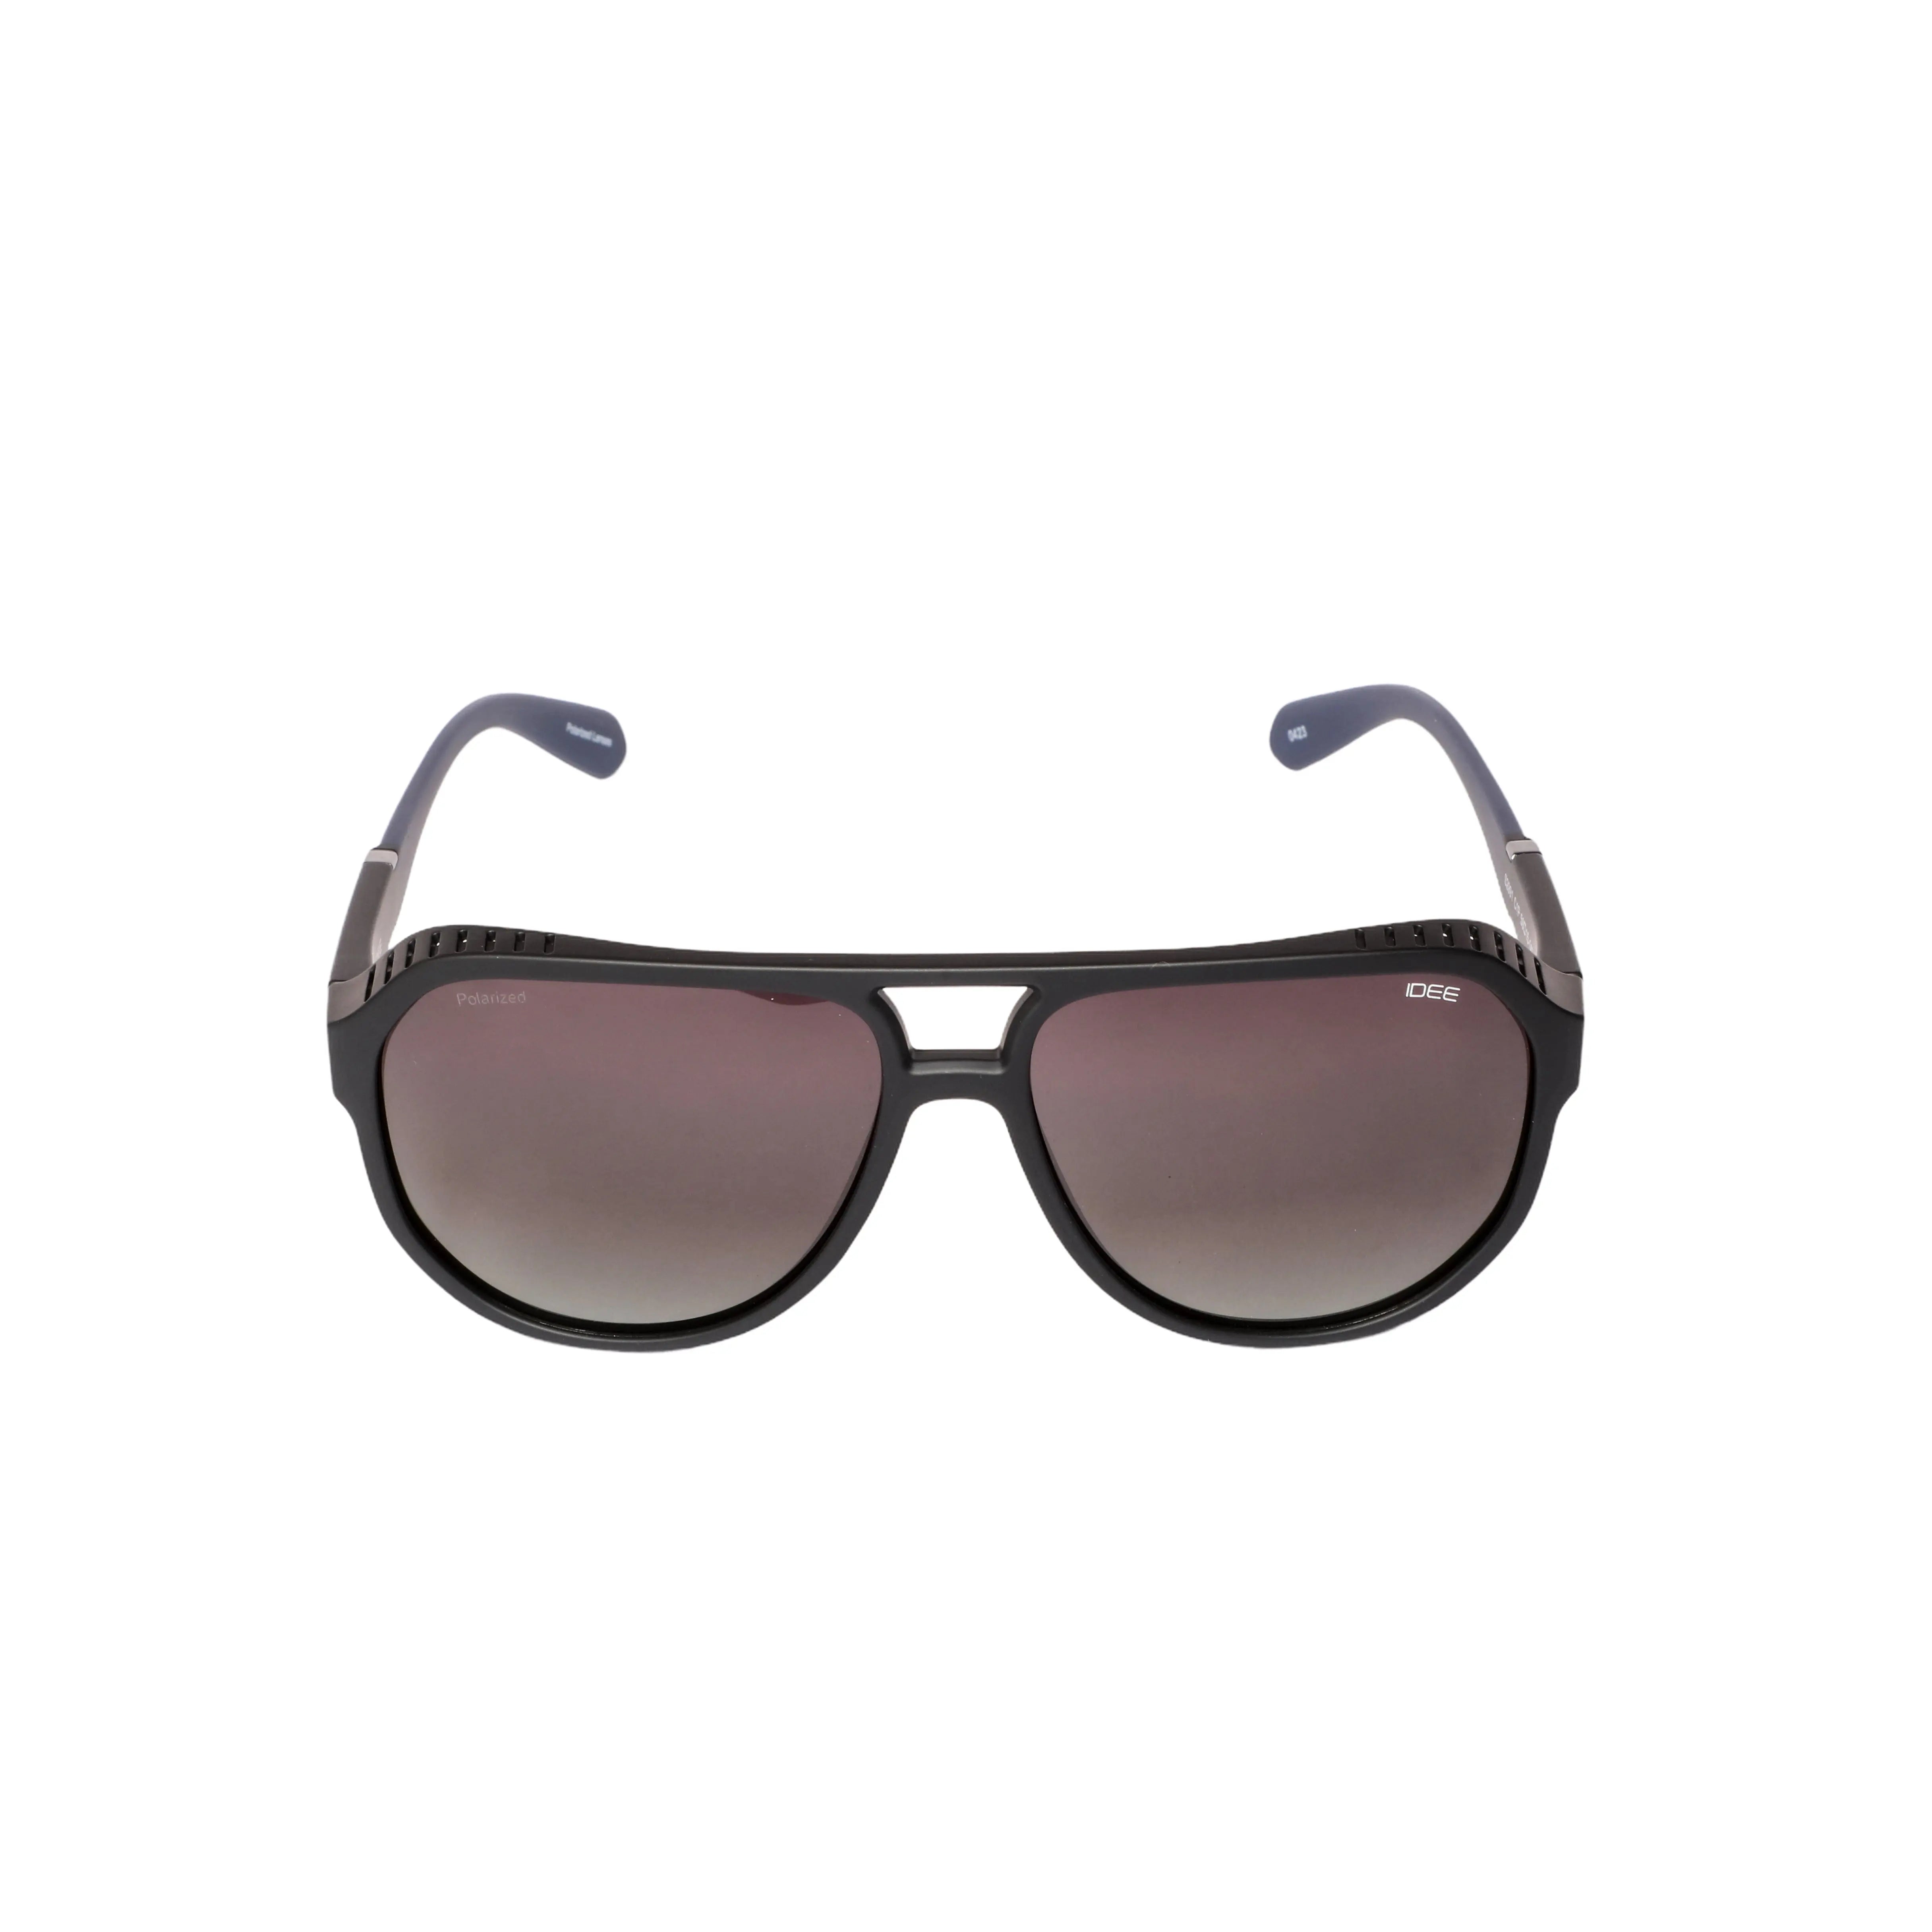 IDEE-S2991--C1 Sunglasses - Premium Sunglasses from IDEE - Just Rs. 3380! Shop now at Laxmi Opticians